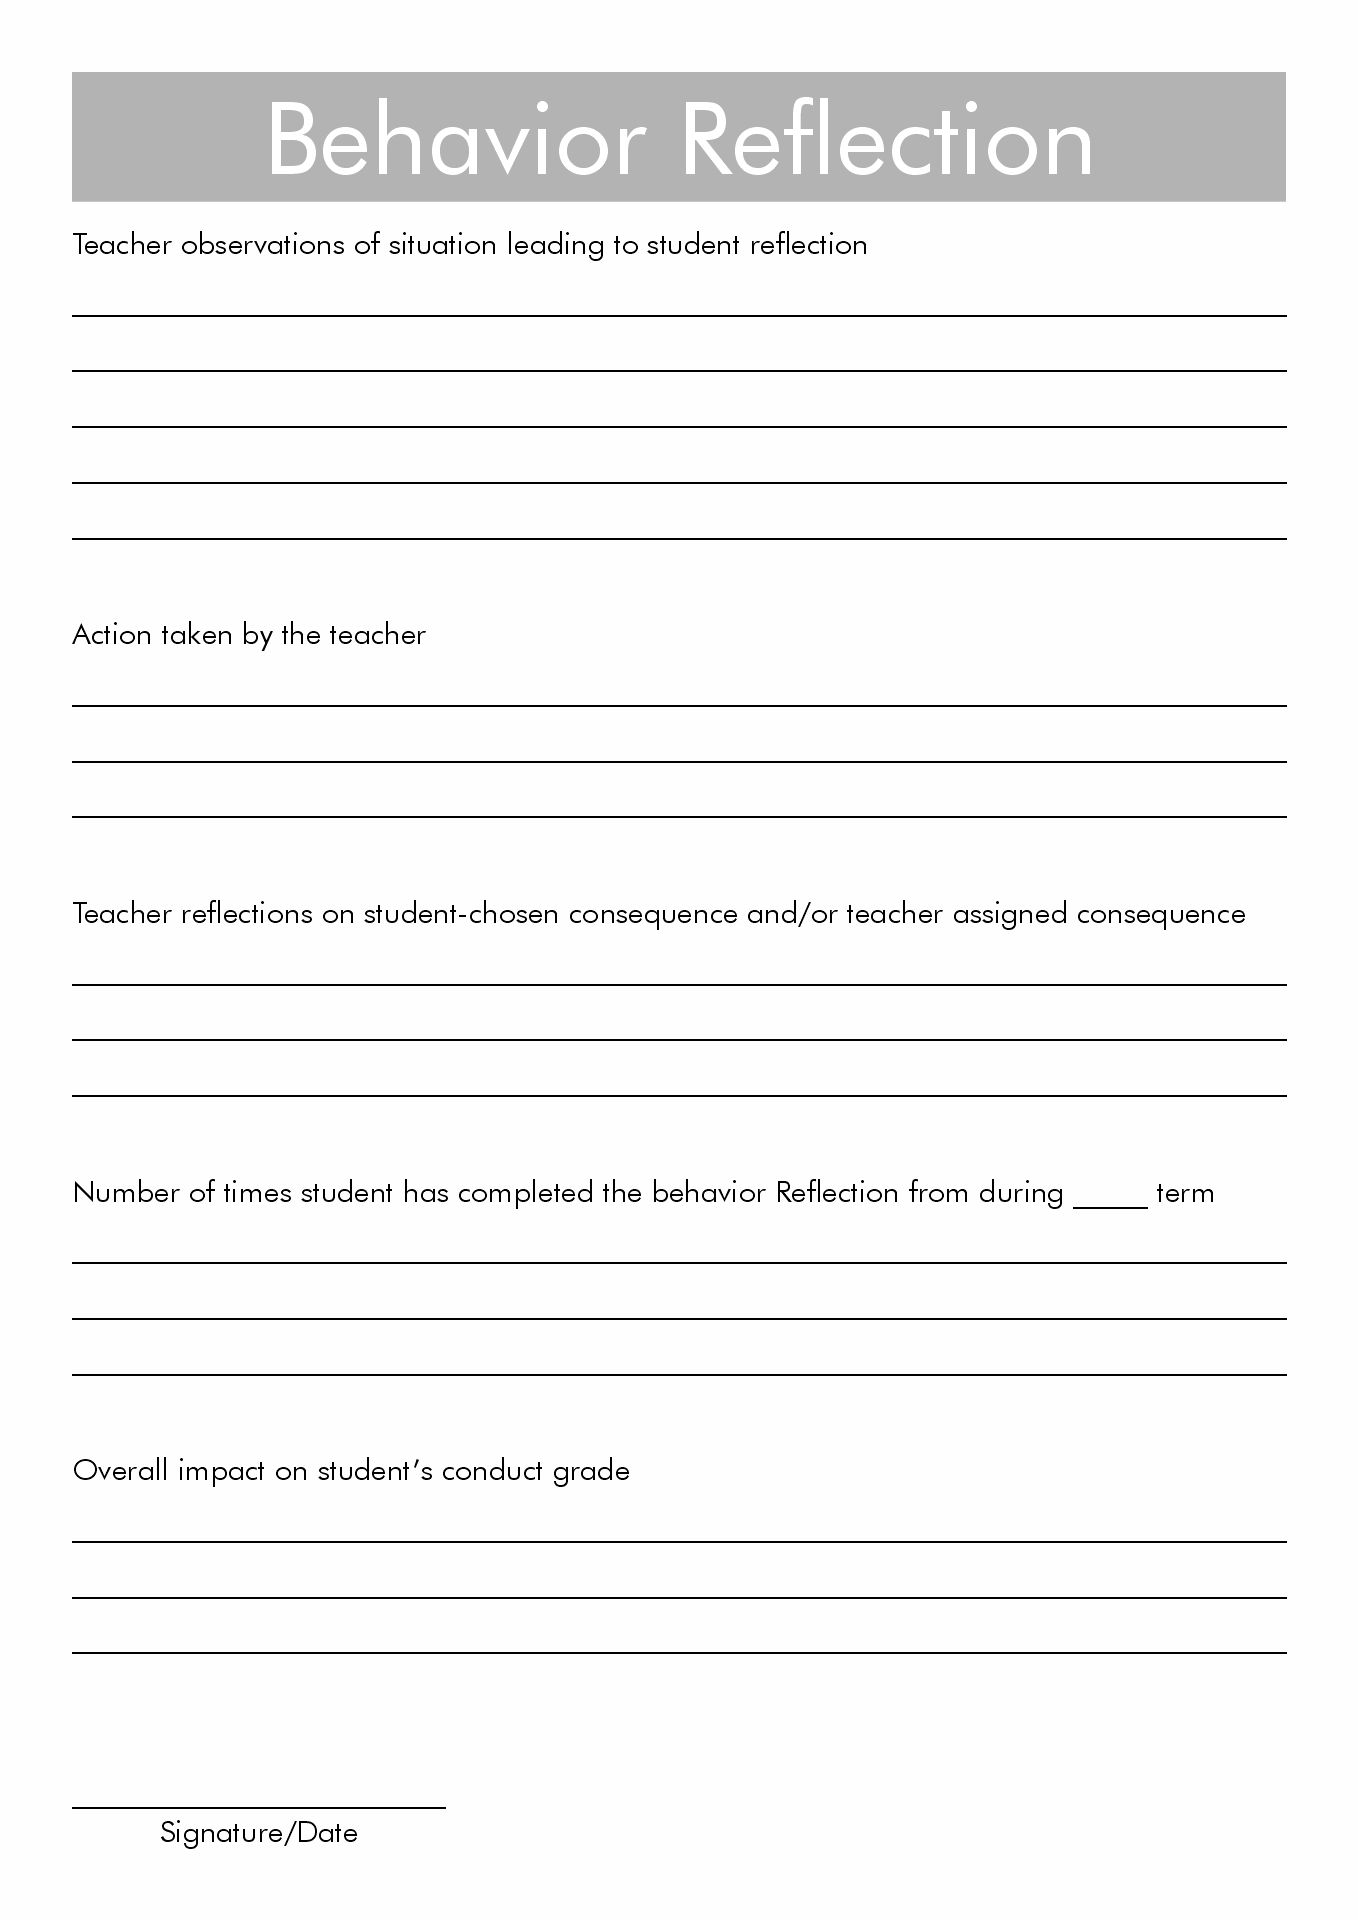 Student Behavior Reflection Sheet Image